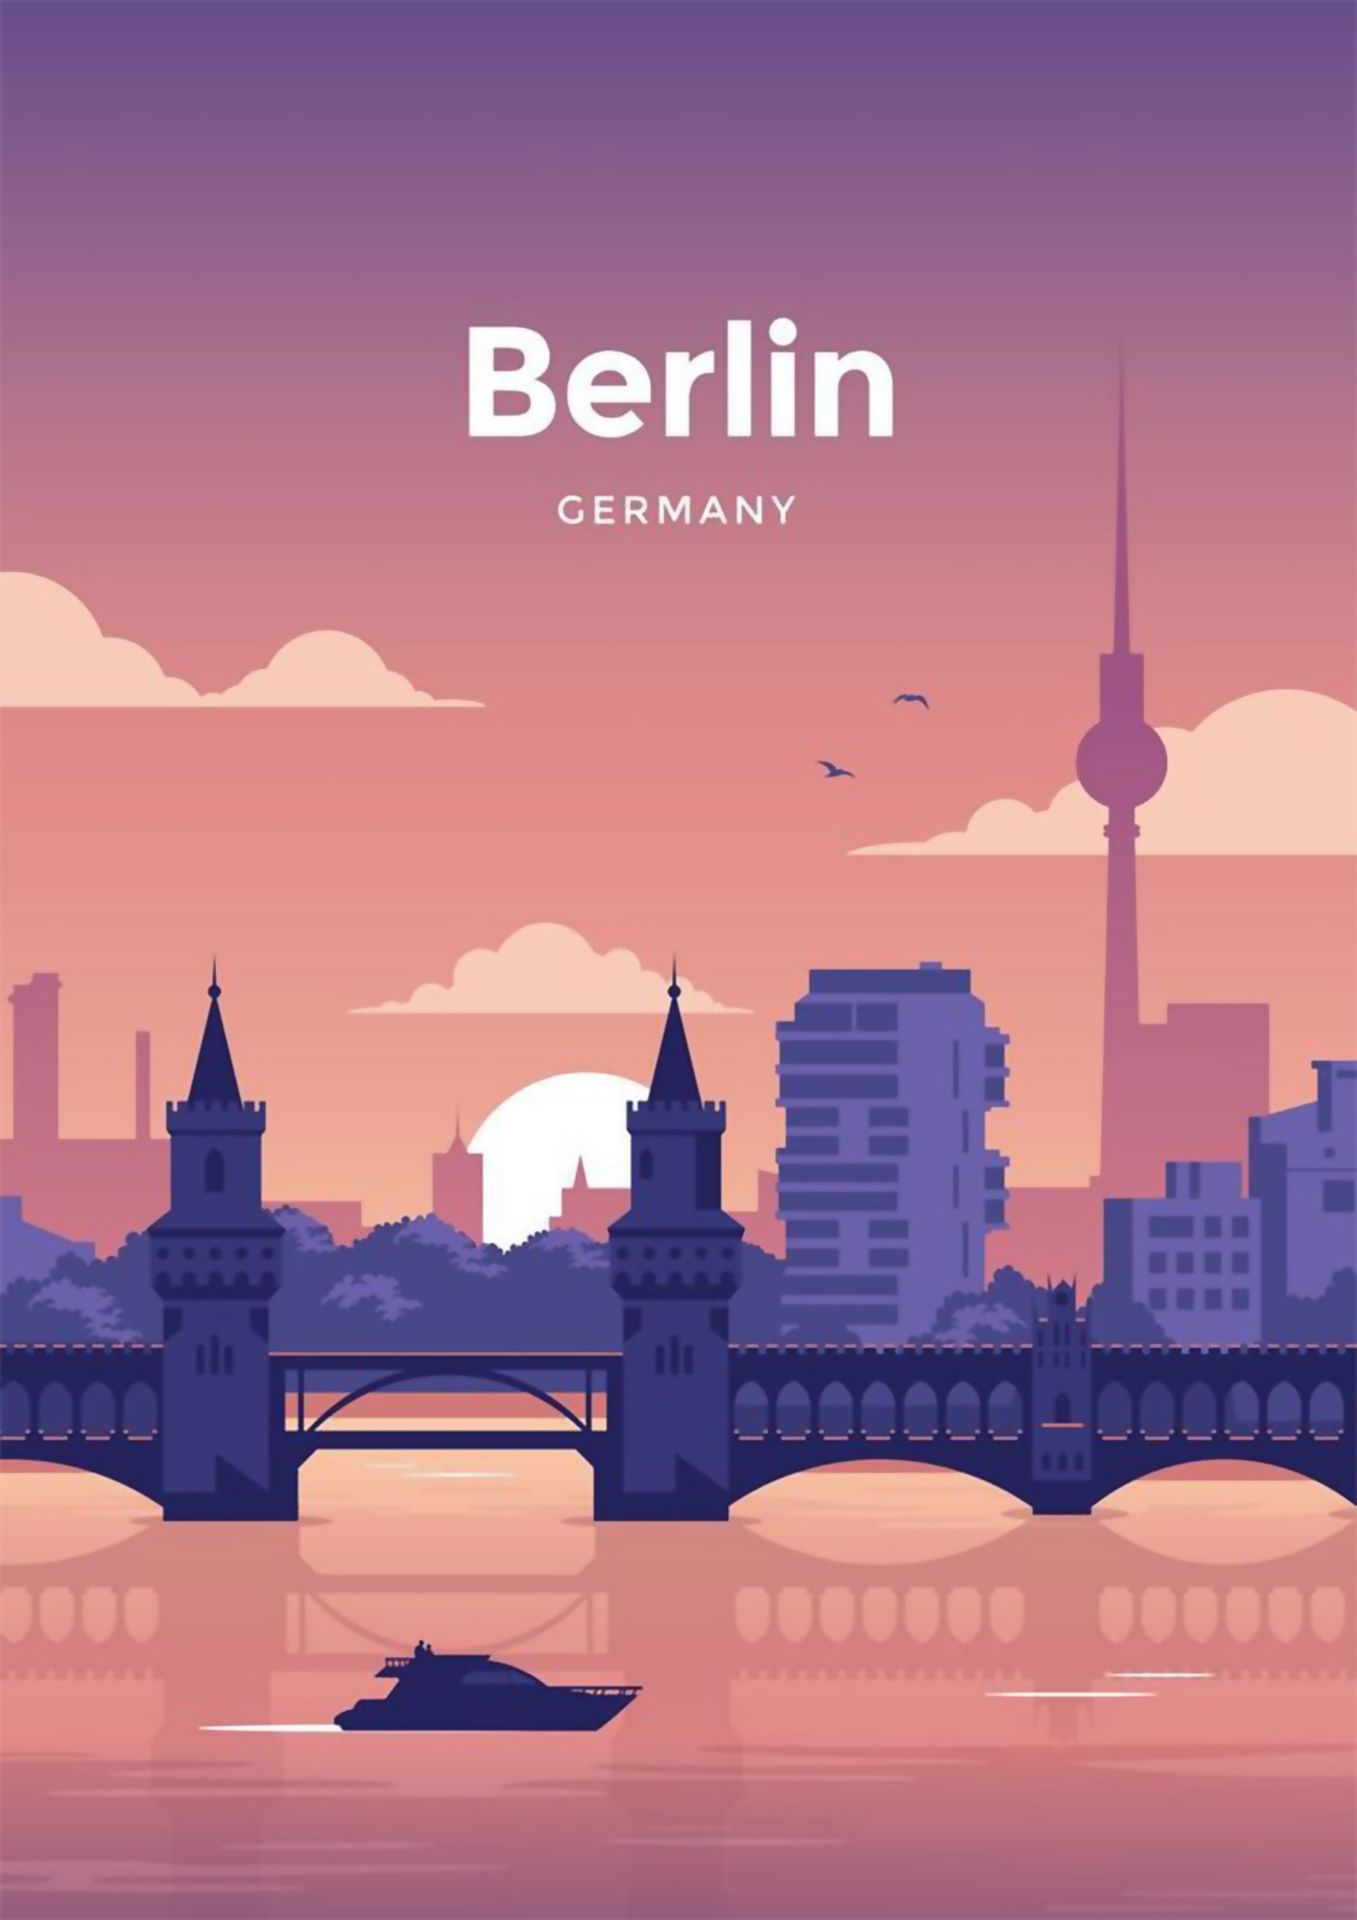 Berlin, Germany Travel Poster